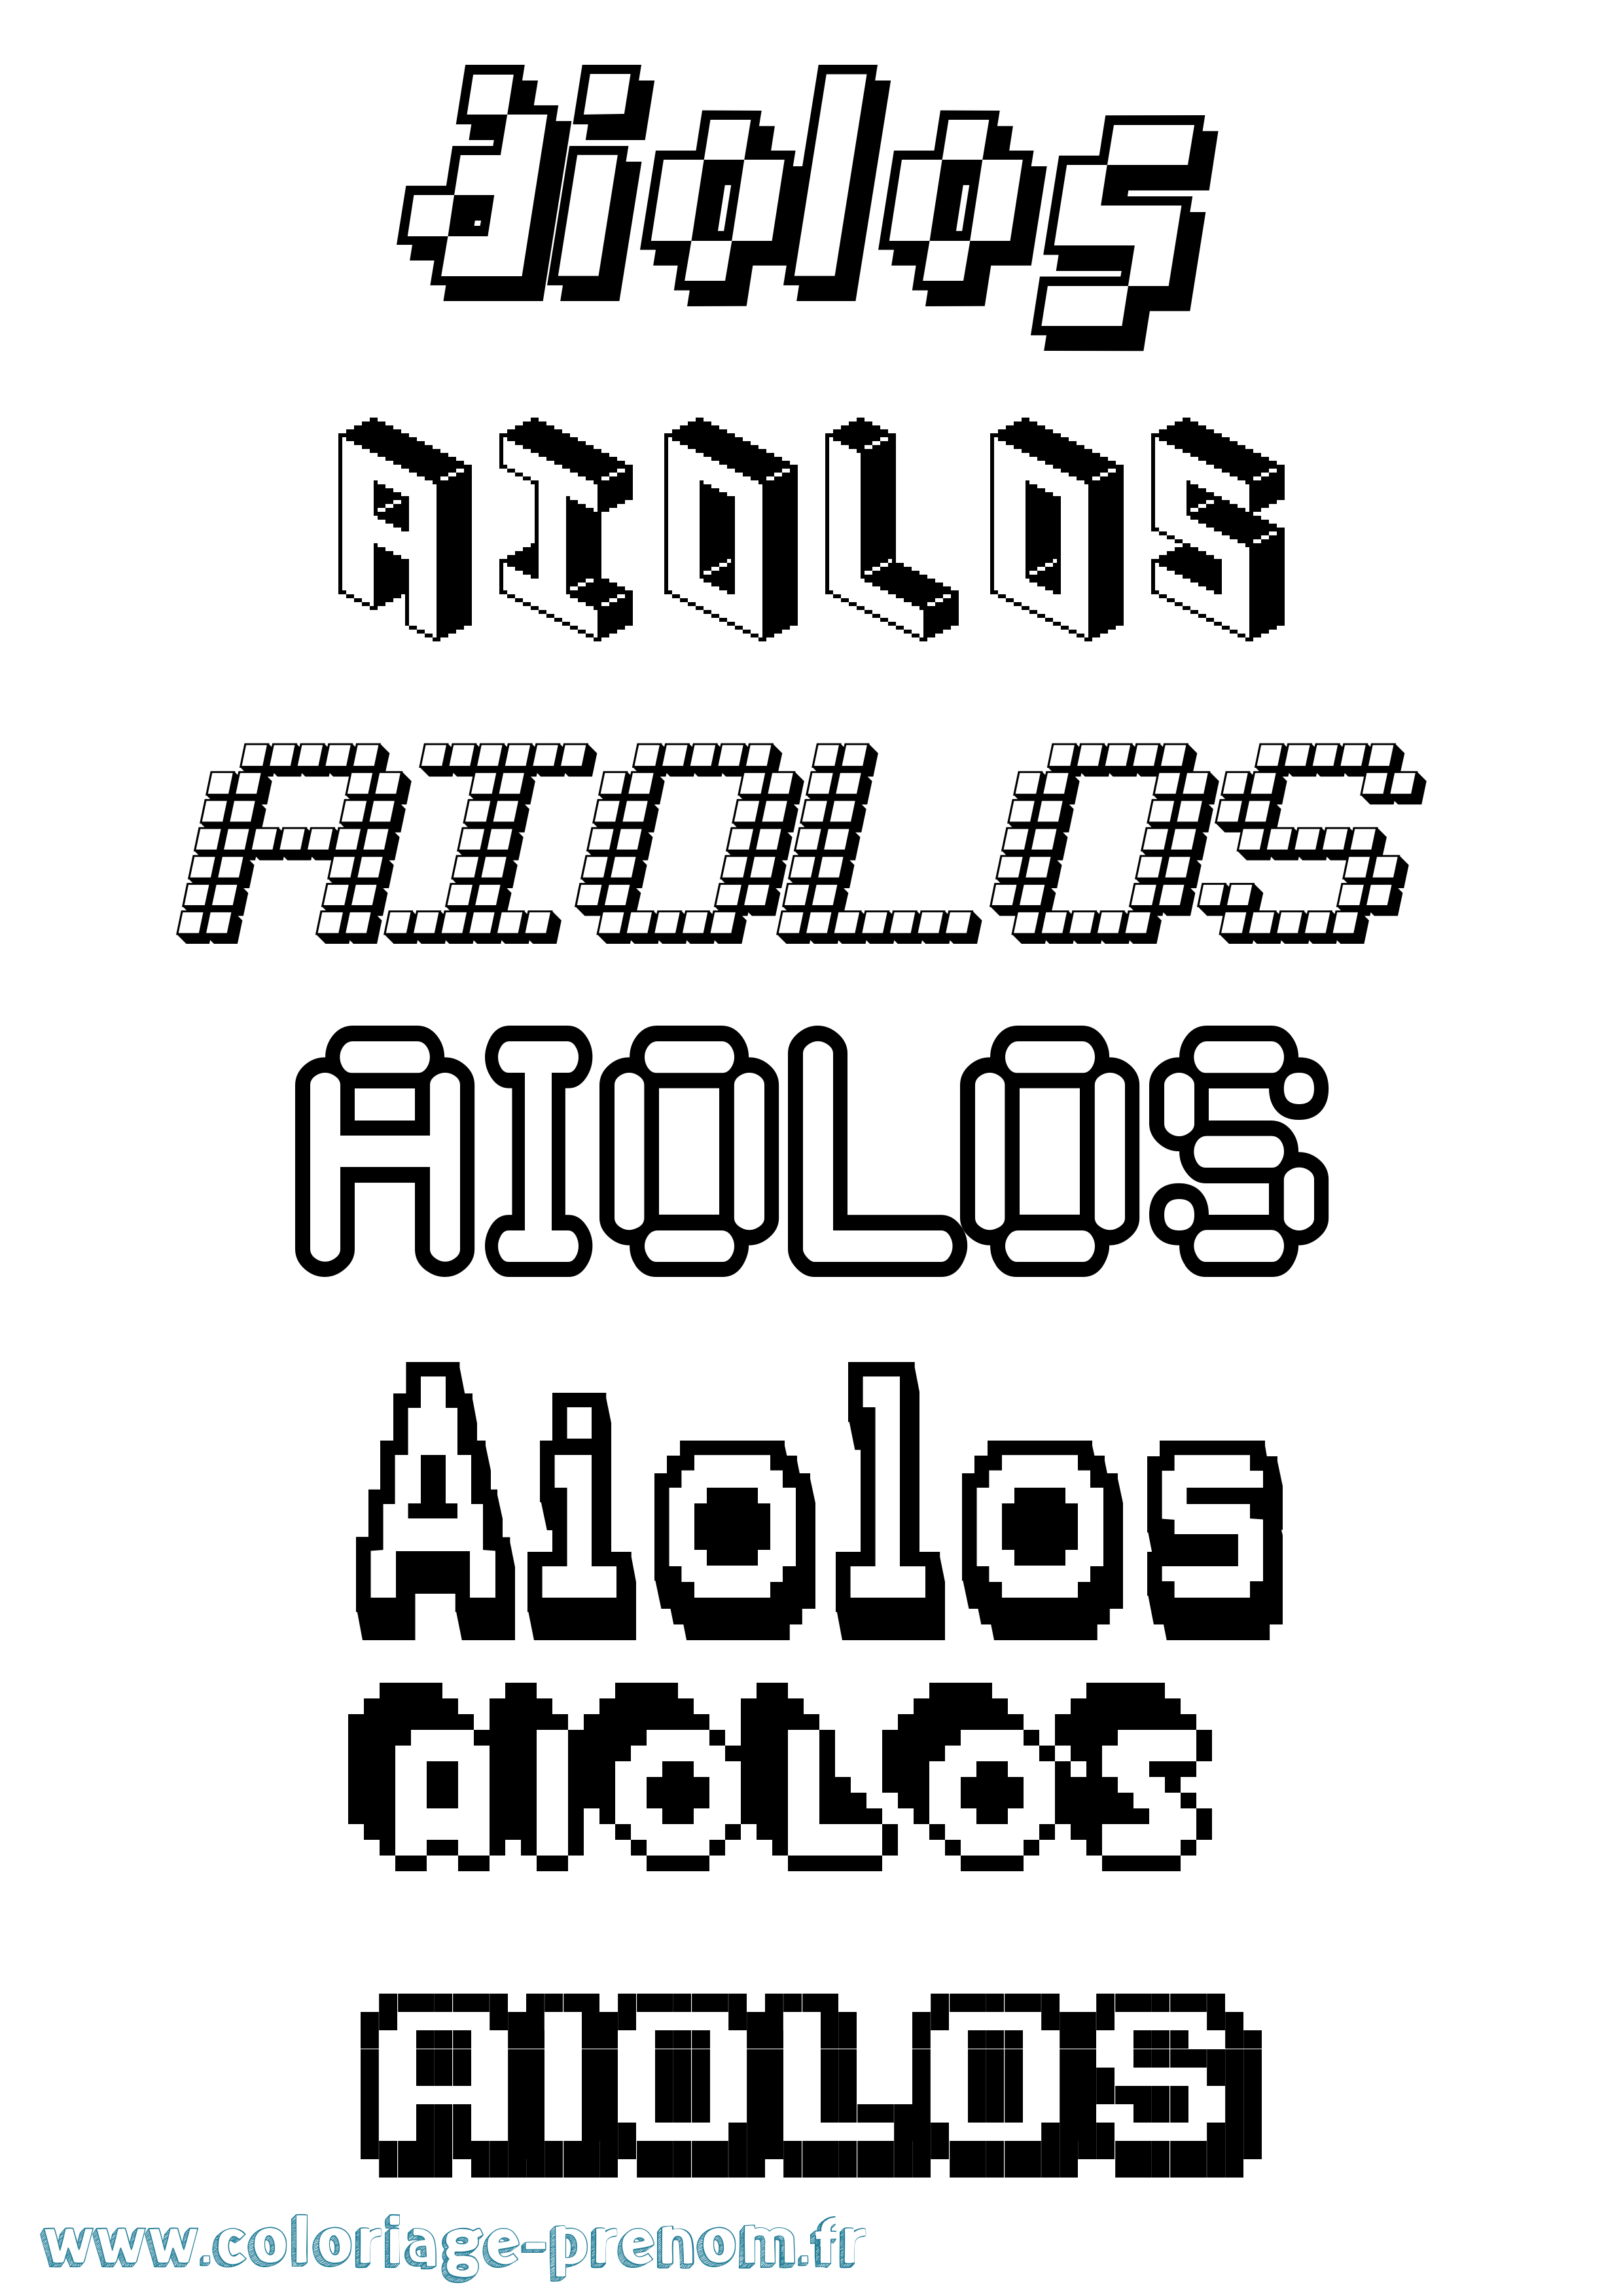 Coloriage prénom Aiolos Pixel